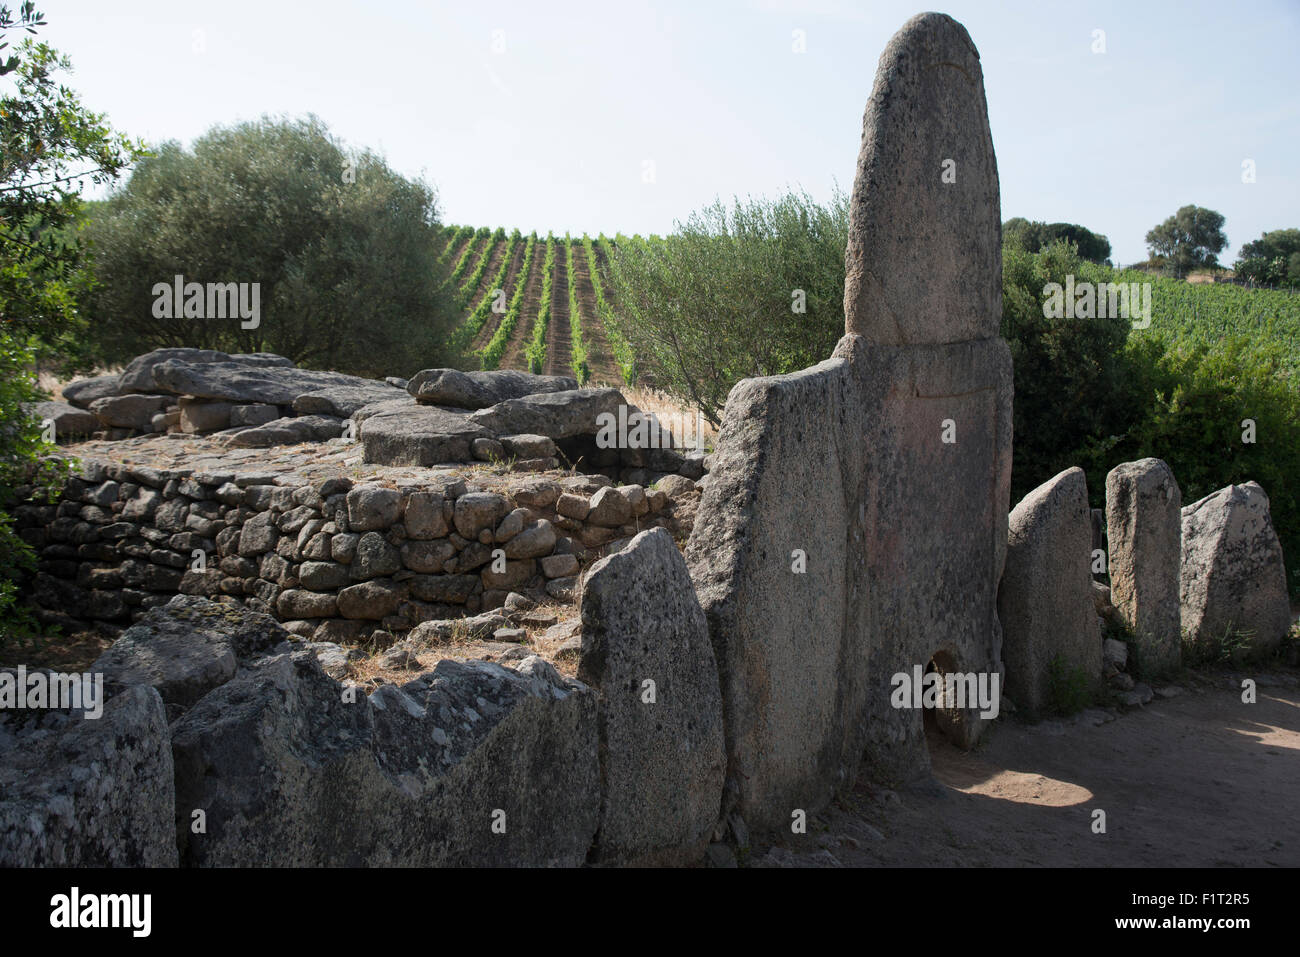 Coddhu Vecchju (Tomba di Giganti), a megalithic Sardinian gallery grave, near Arzachena, Sardinia, Italy, Europe Stock Photo